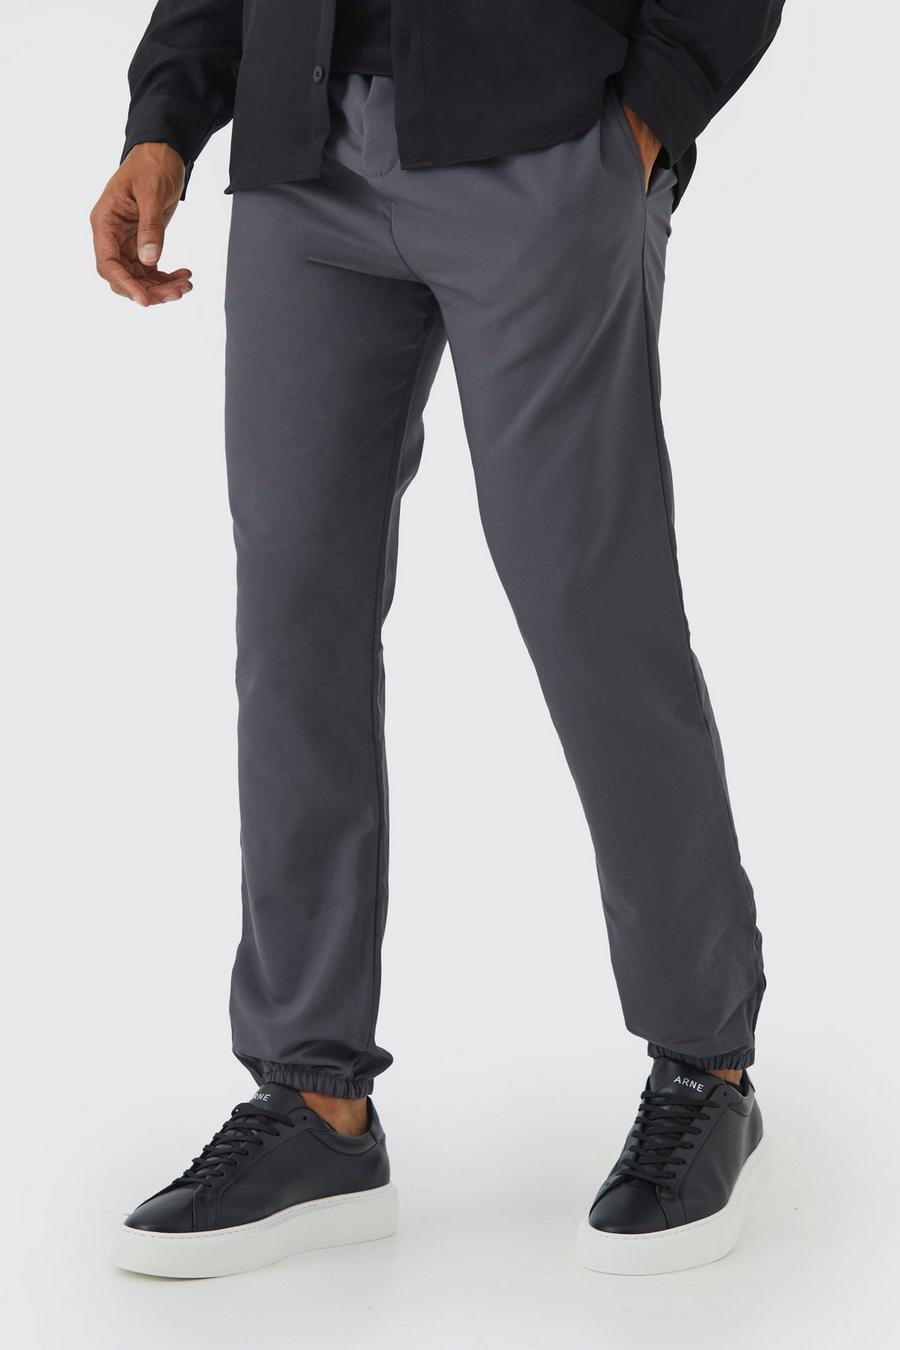 Pantalón elástico ajustado técnico, Charcoal gris